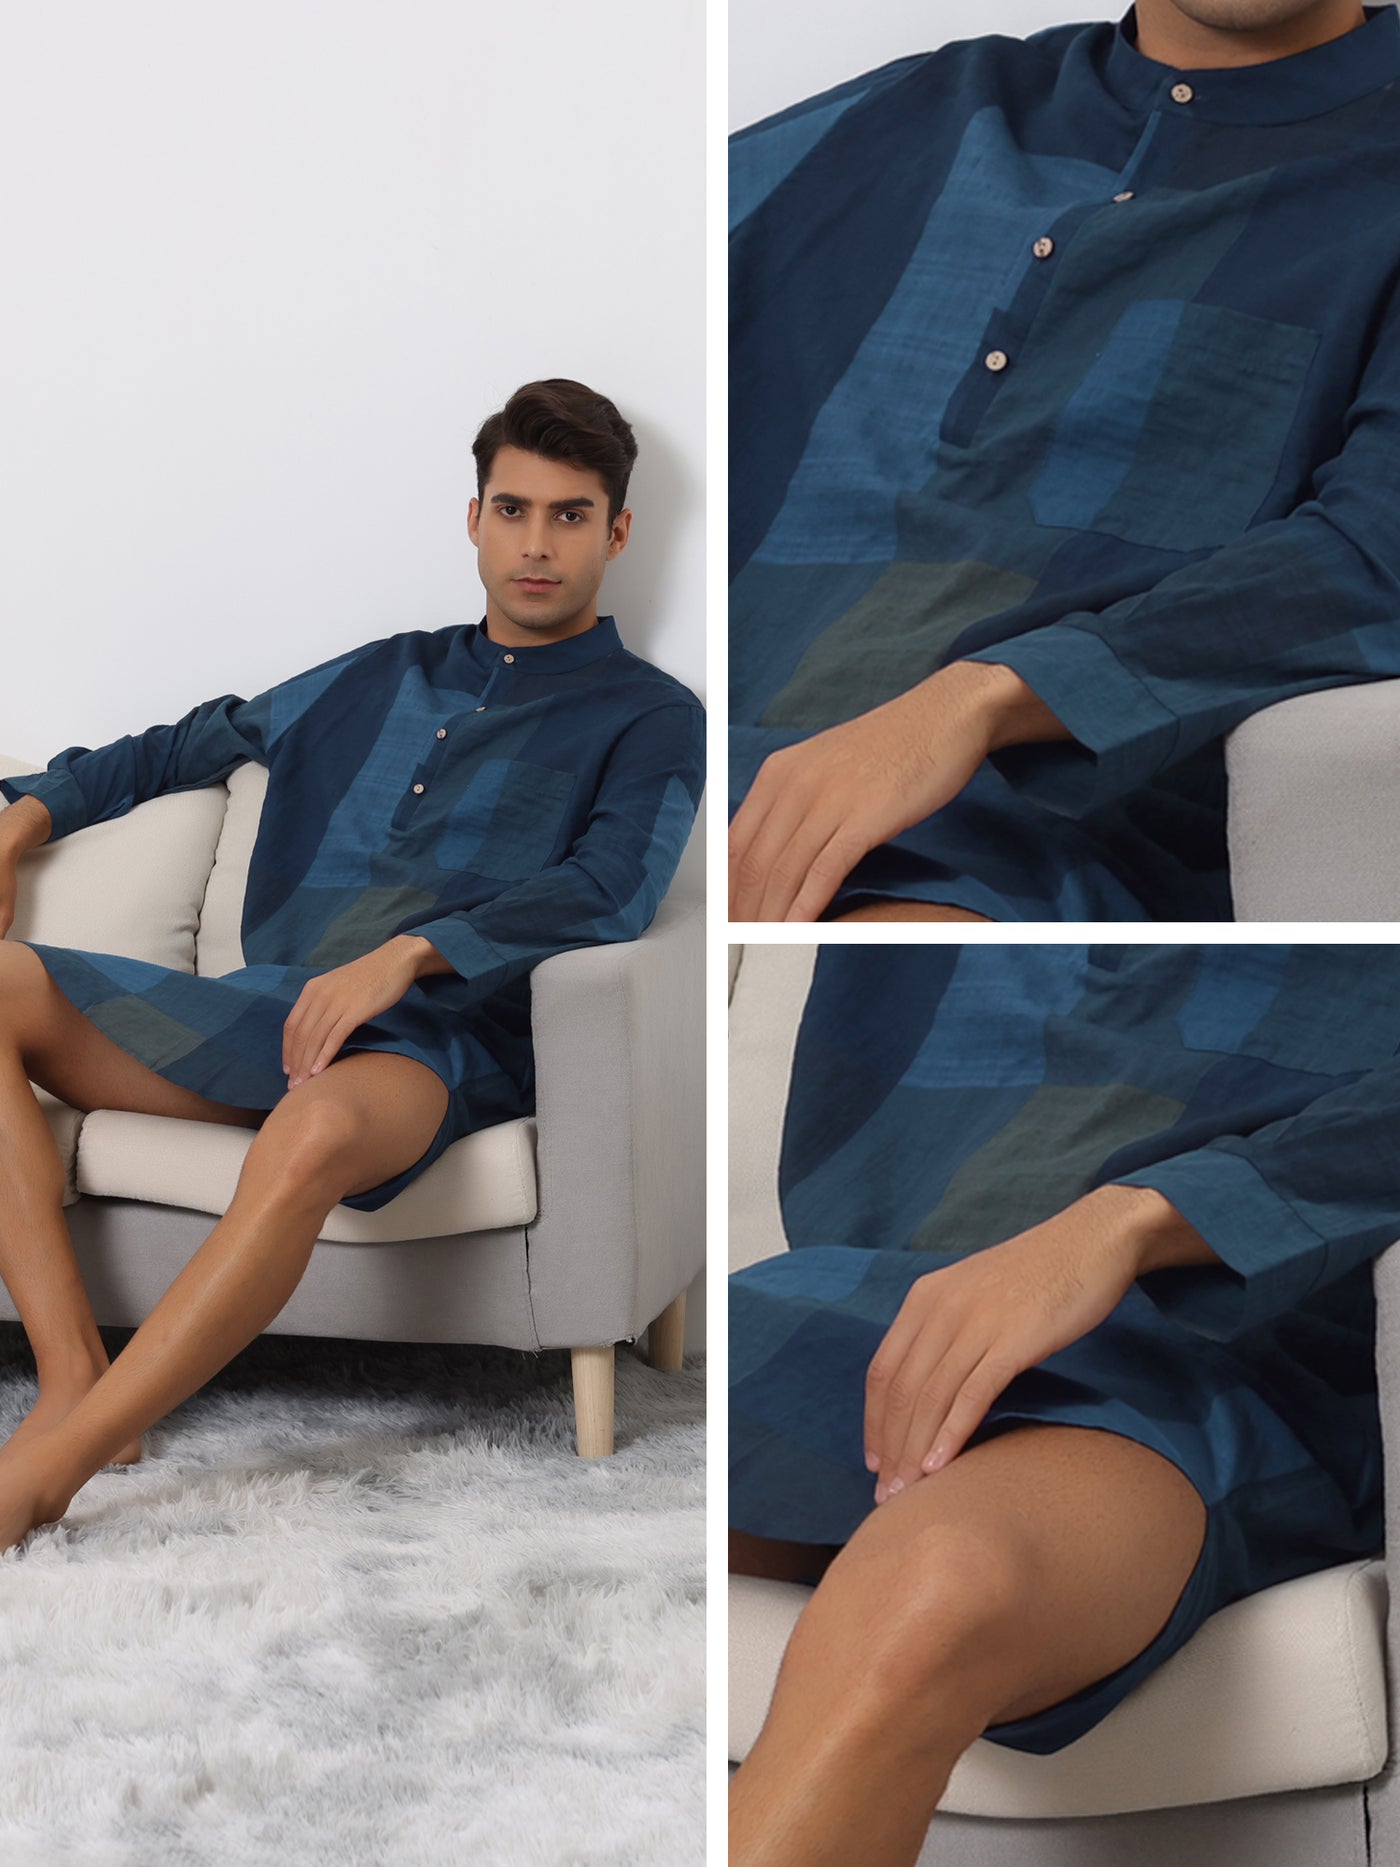 Bublédon Plaid Nightshirt for Men's Henley Collar Color Block Checked Pattern Sleepshirt